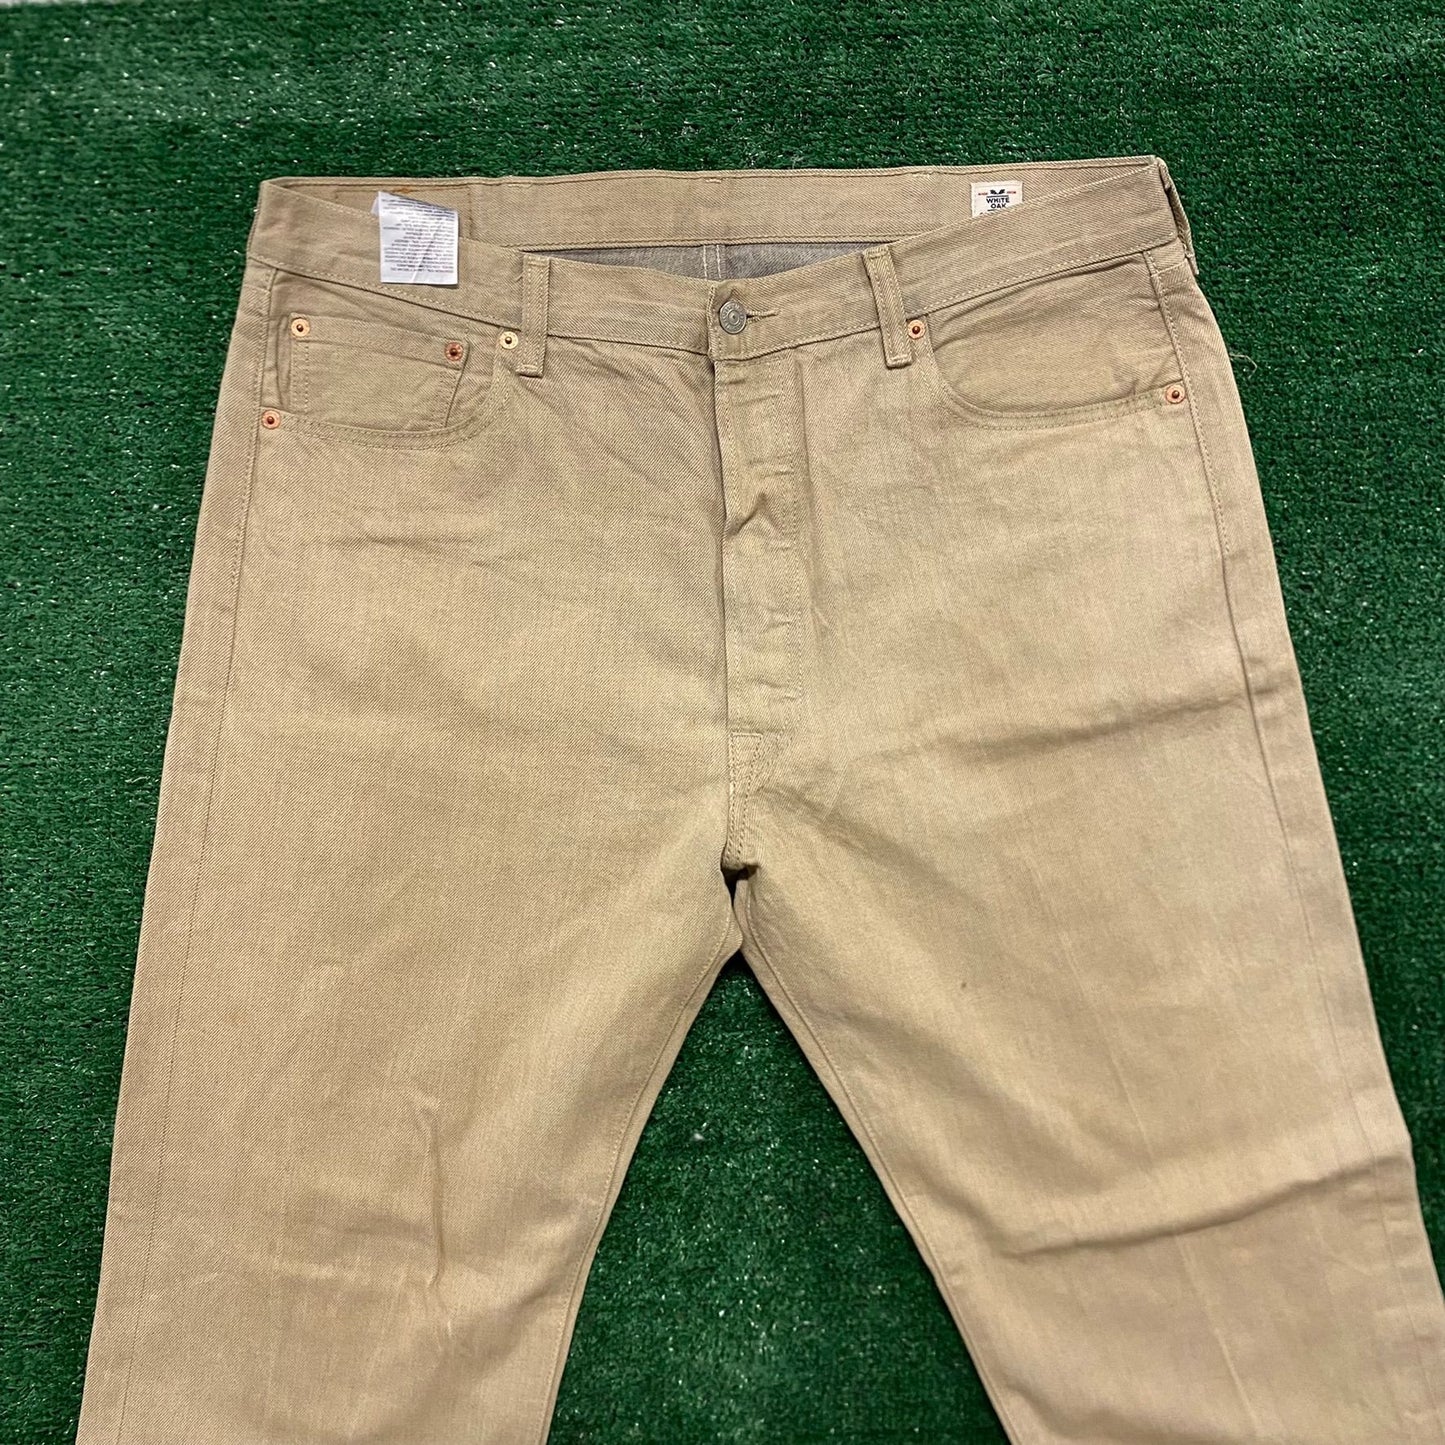 Levi's 501 Cream Beige Straight Vintage Denim Jeans Pants